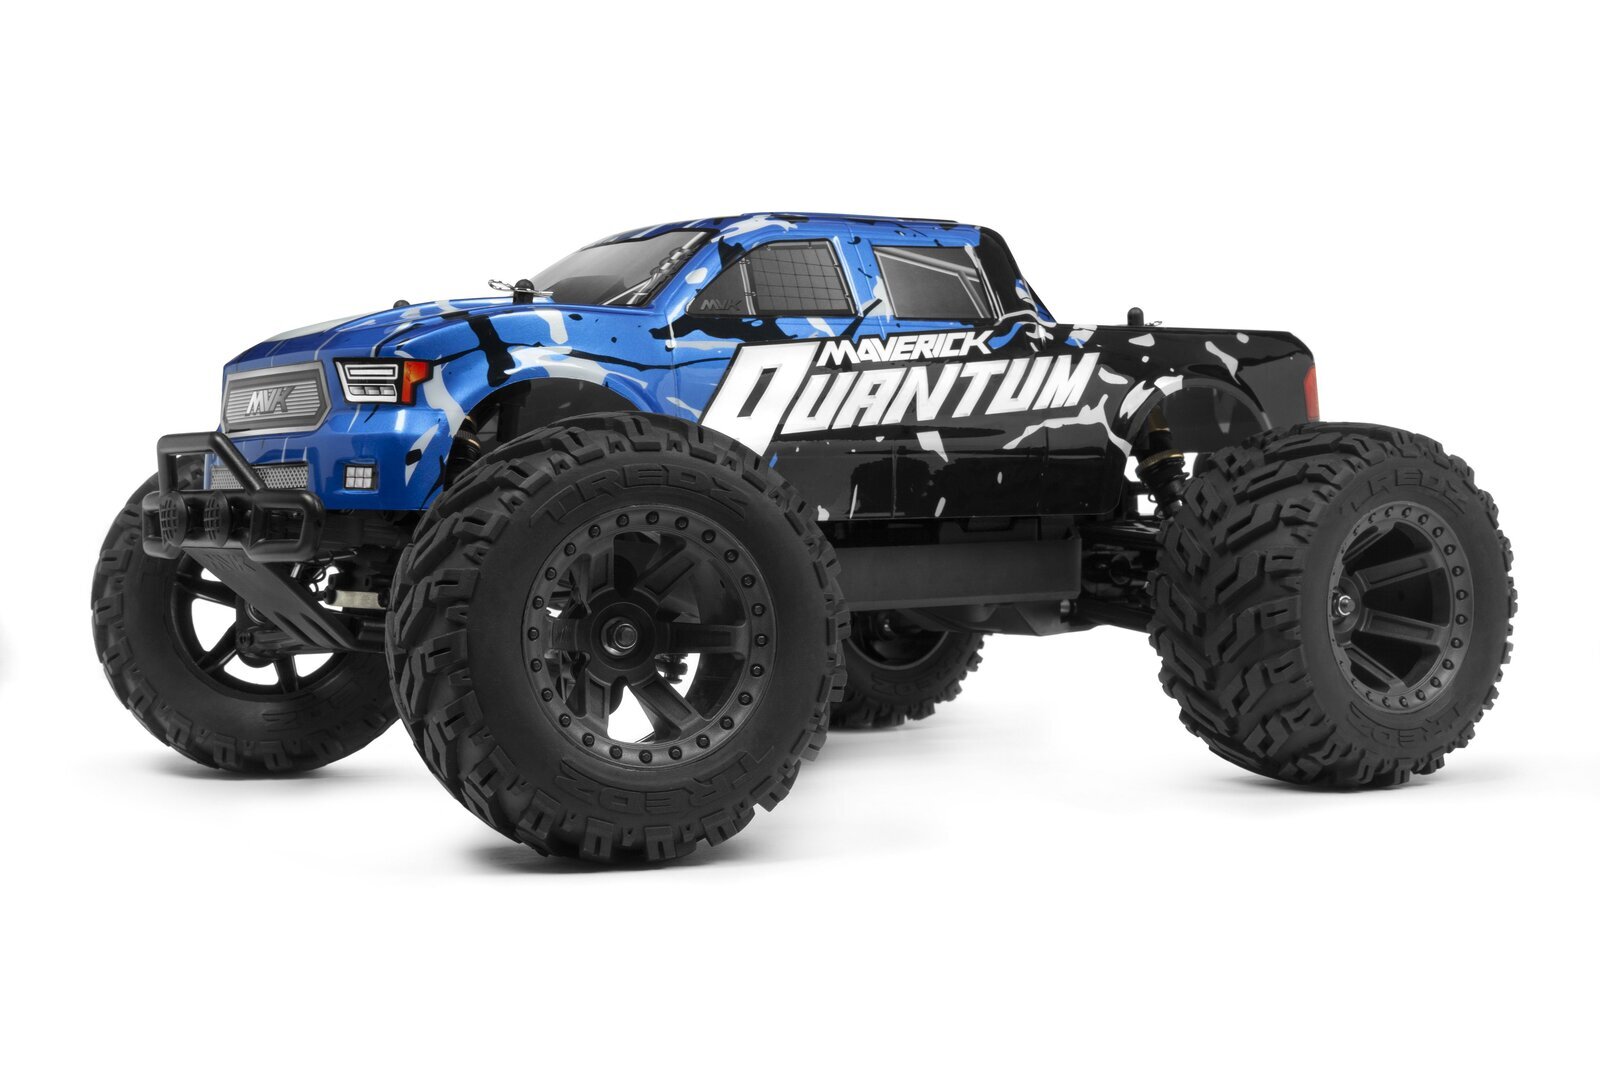 Maverick Quantum MT 1/10 4WD Brushed Electric Monster Truck (Black/Blue) [150100] - [Sunshine-Coast] - Maverick - [RC-Car] - [Scale-Model]